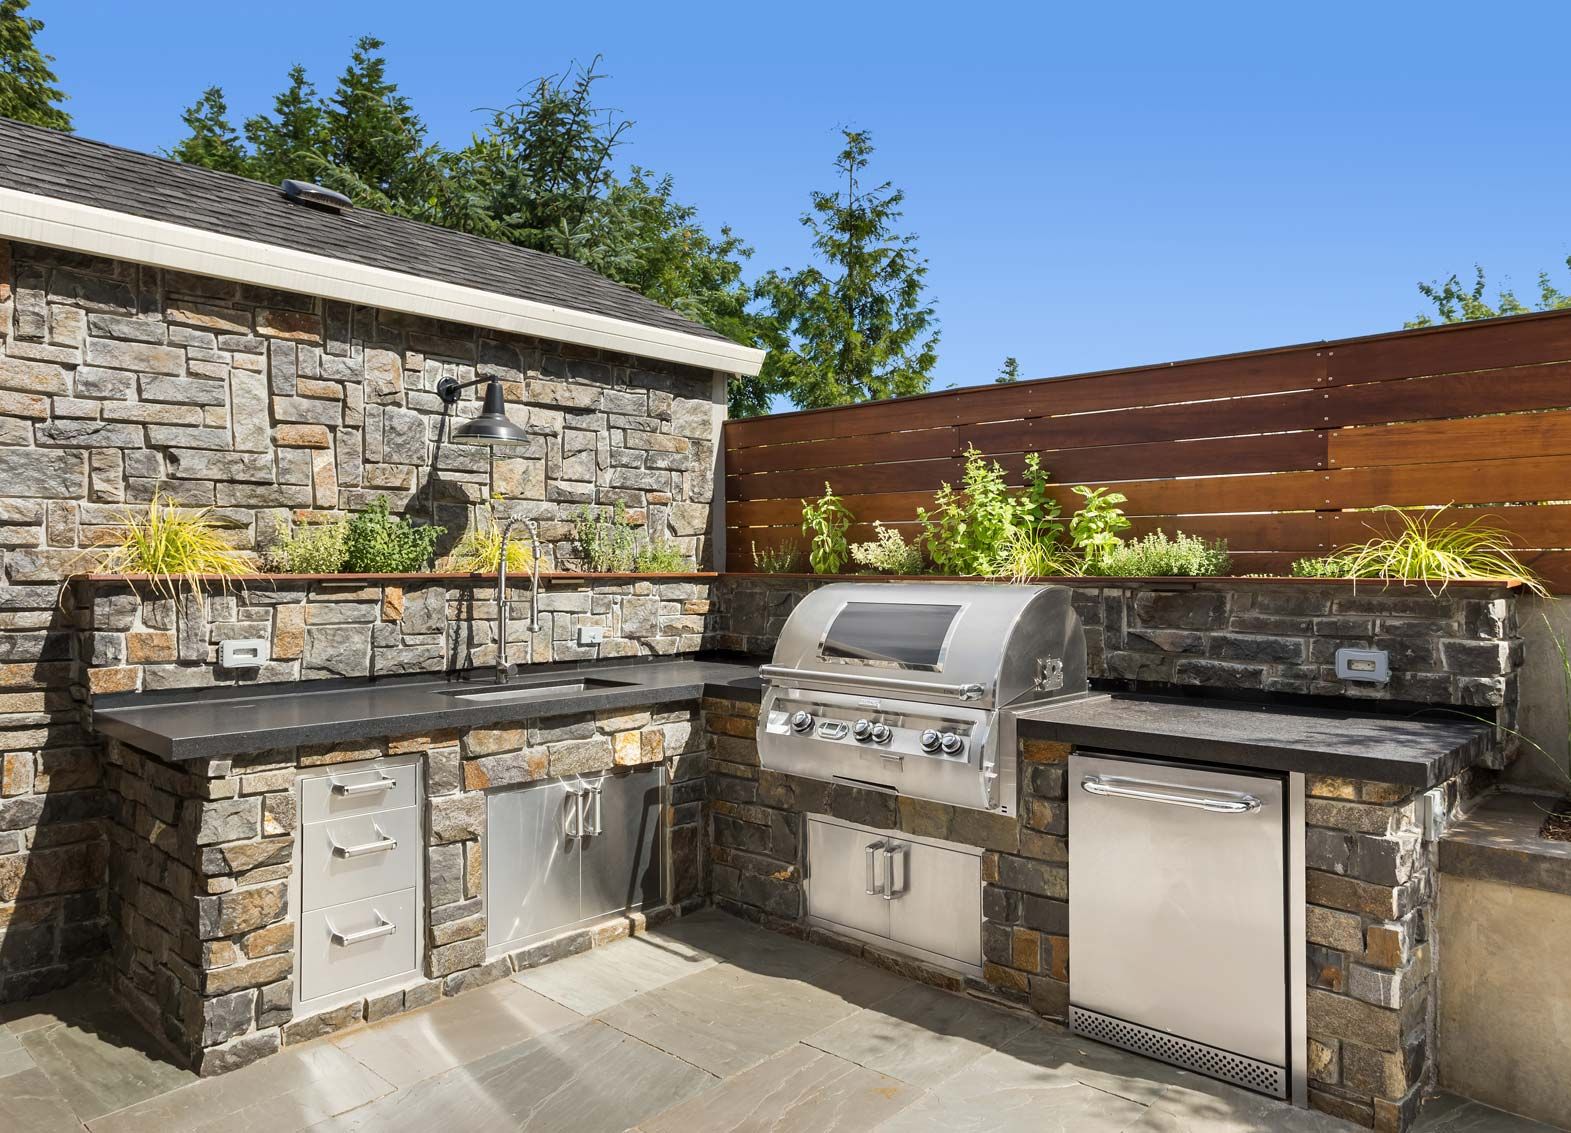 Outdoor kitchen and stonework